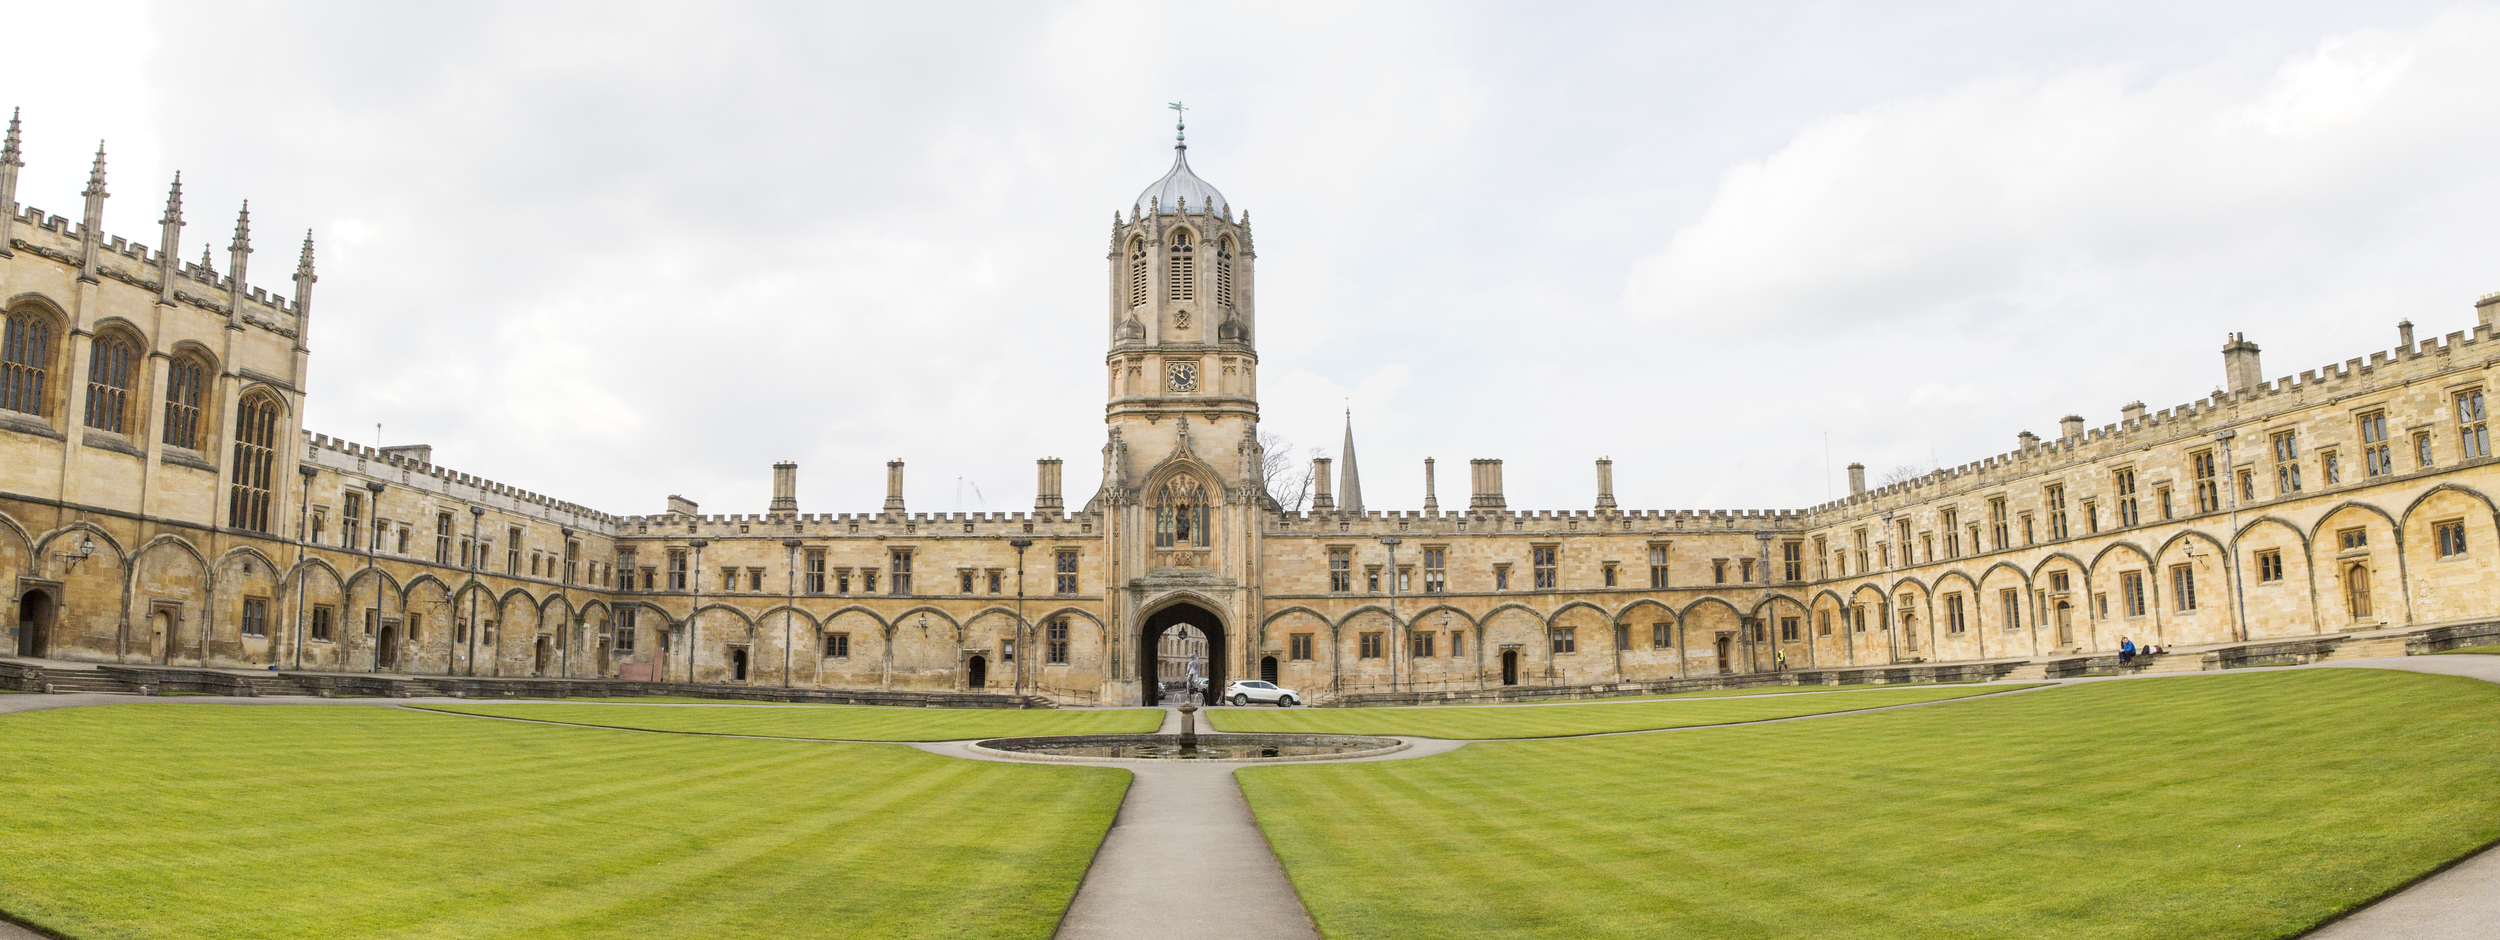 Oxford Panorama 3.jpg